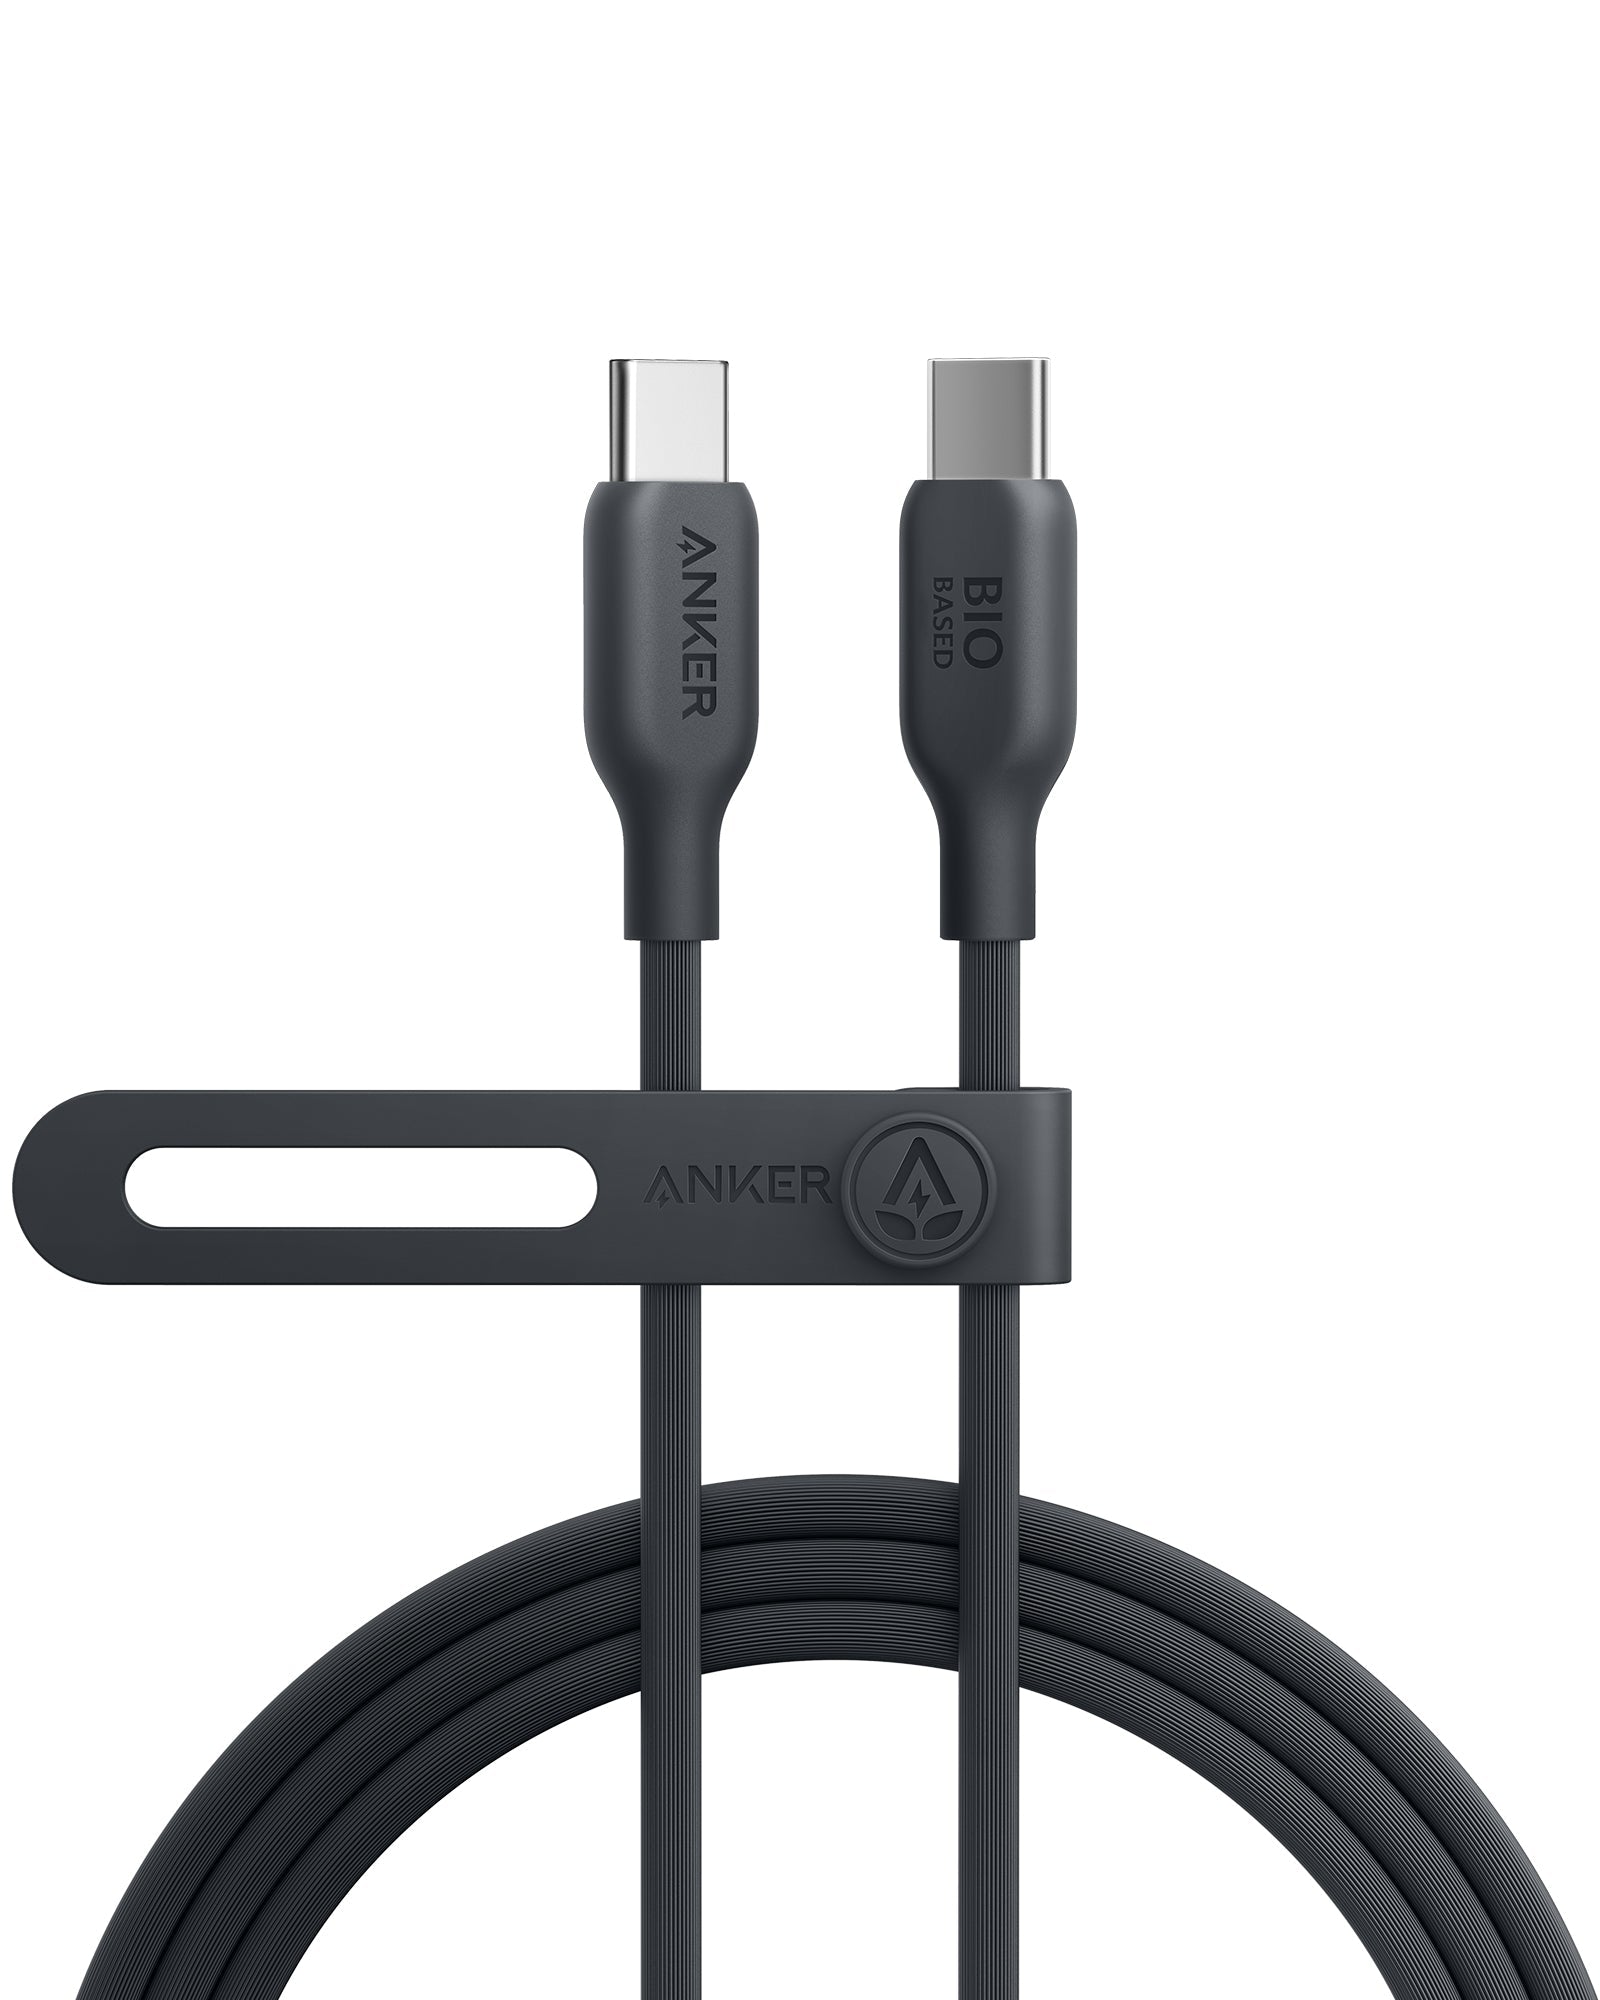 Photos - Cable (video, audio, USB) ANKER 543 USB-C to USB-C Cable  6ft / Phantom Black A80E2011 (Bio-Based)